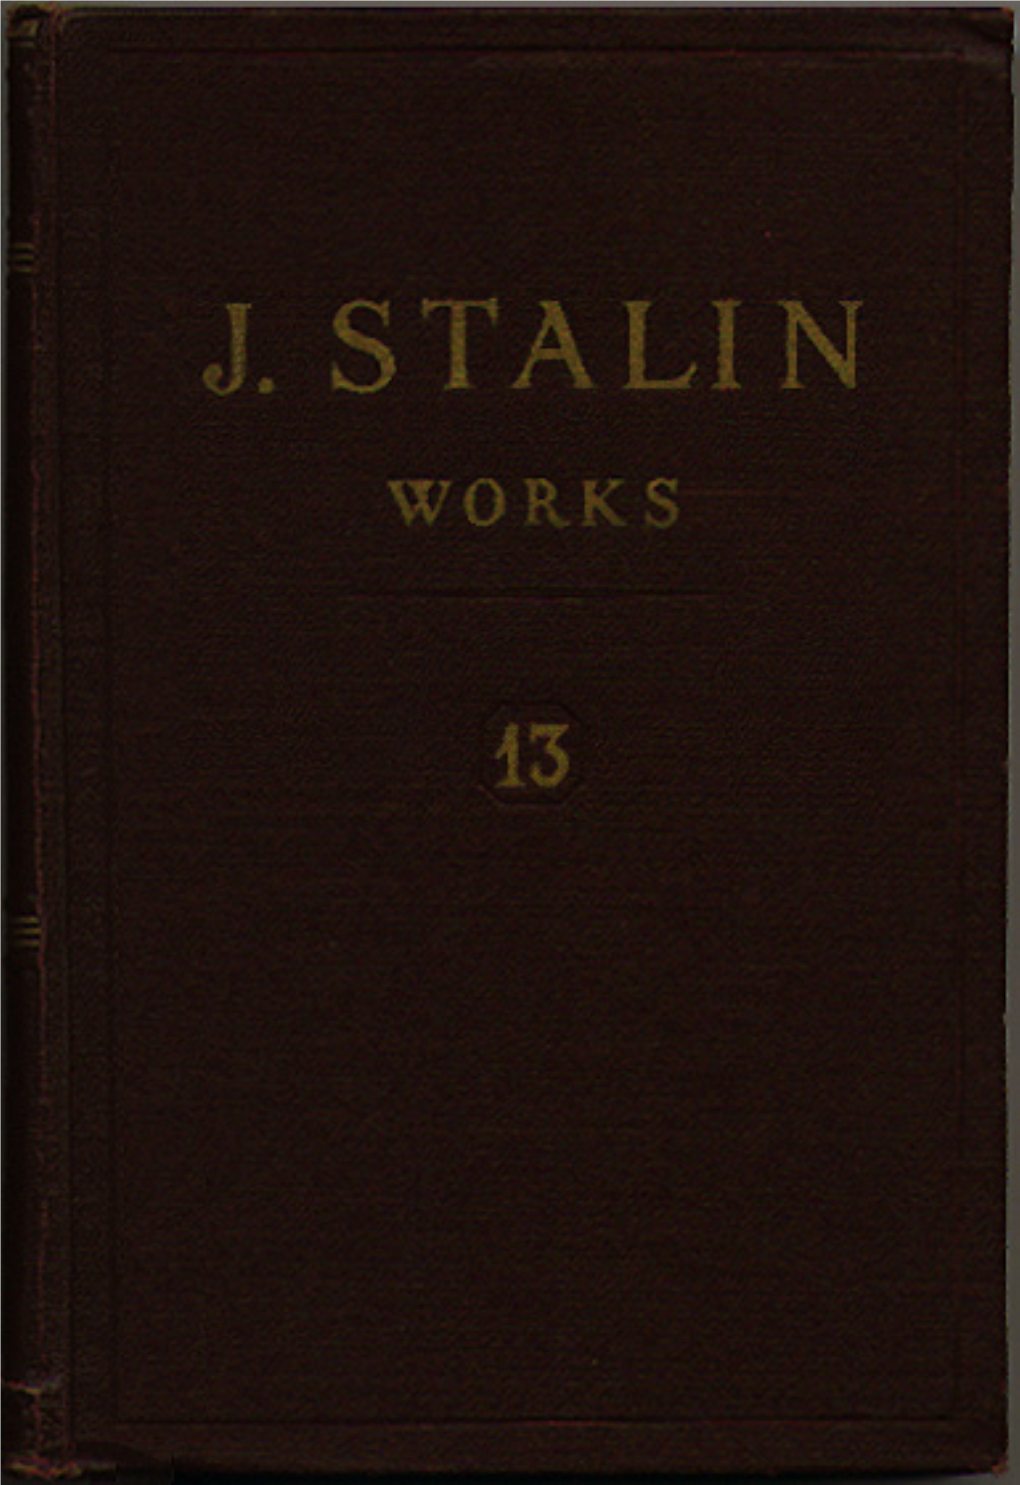 J. Stalin August 1930